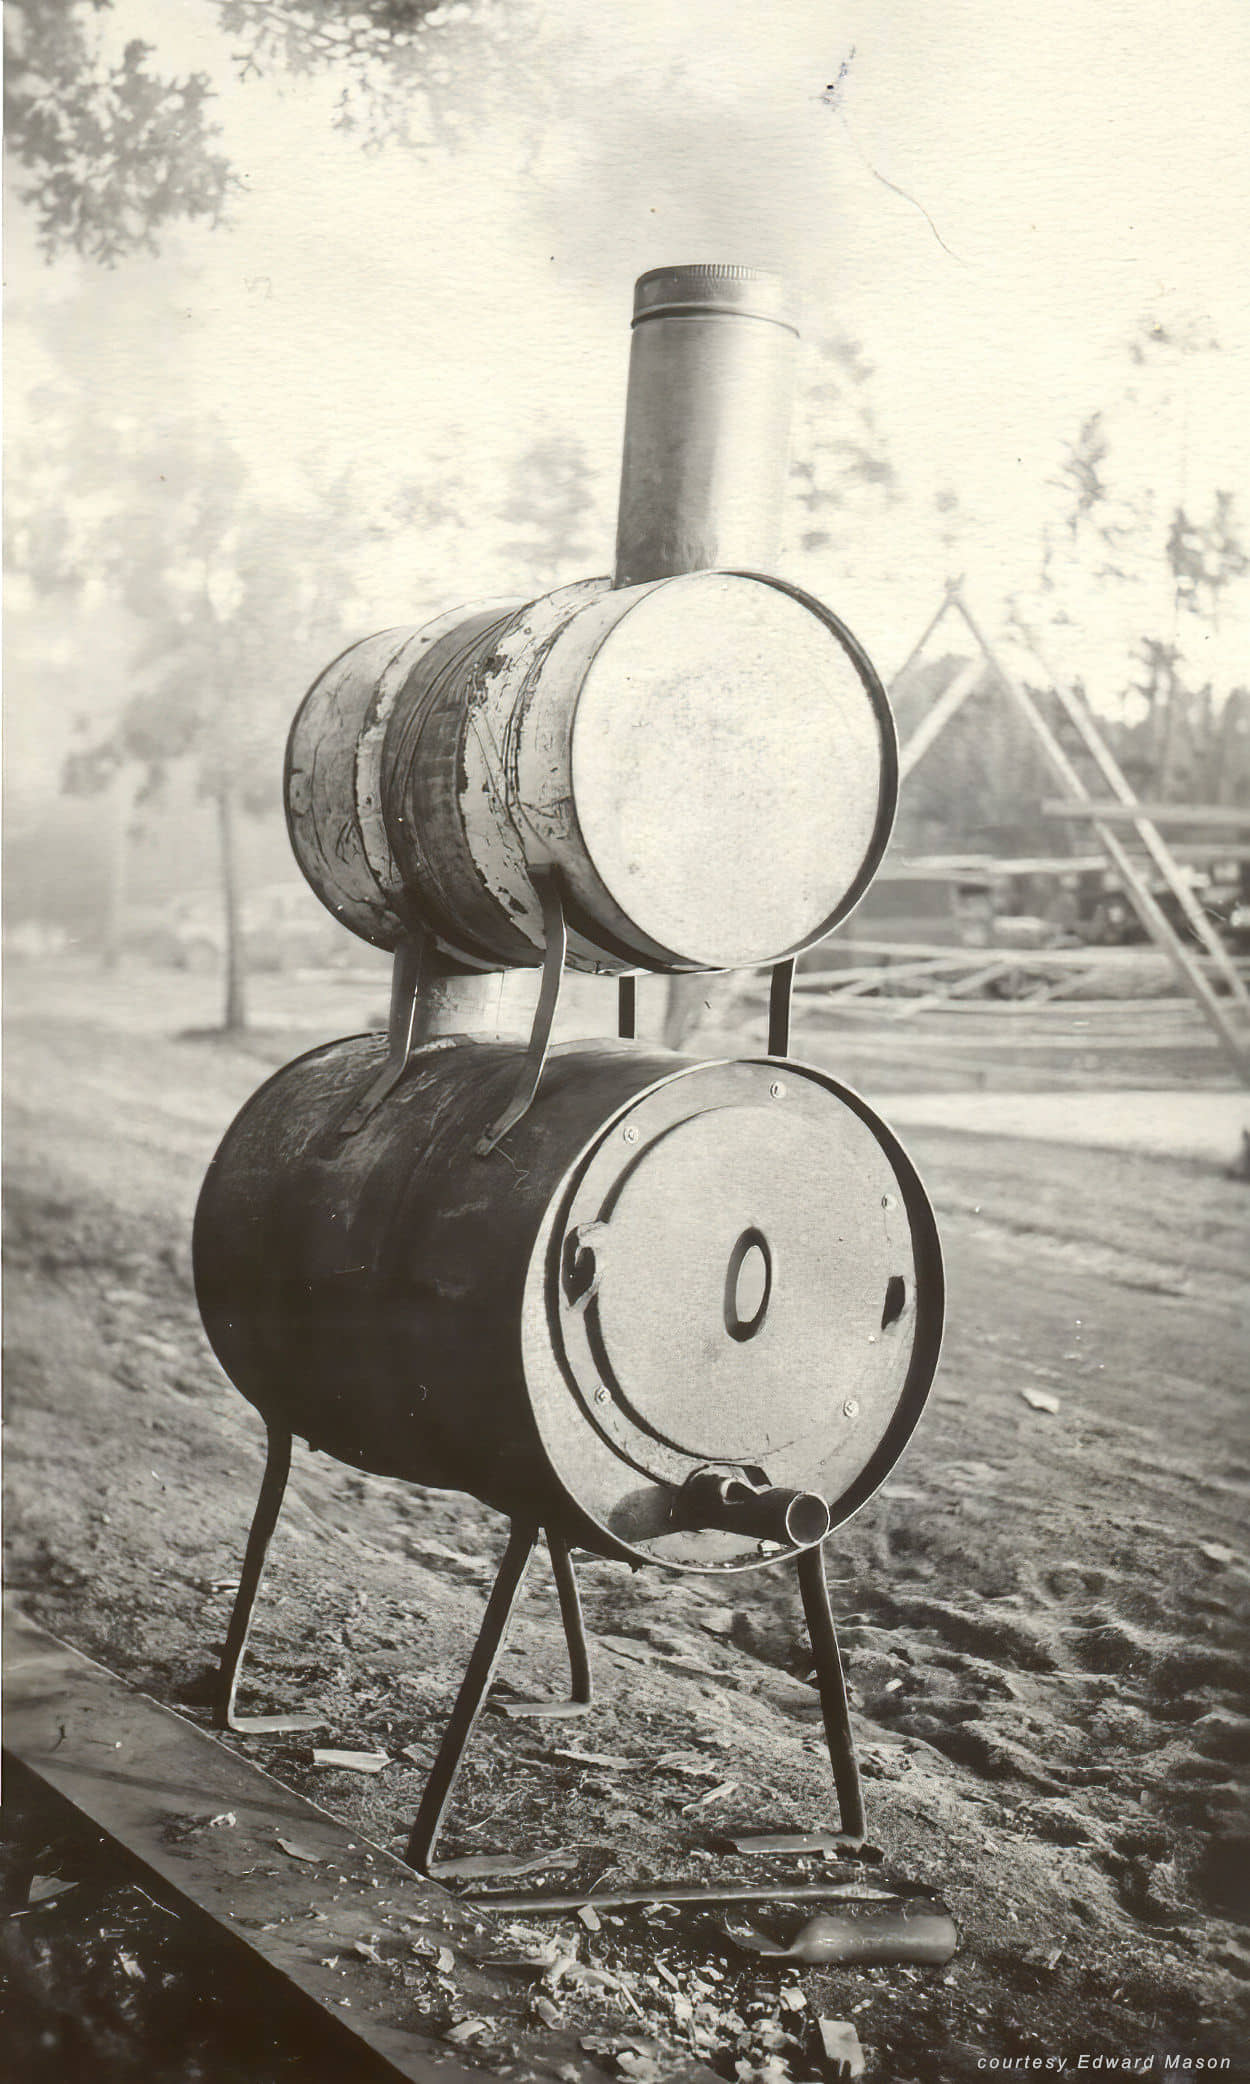 stove or burn barrel